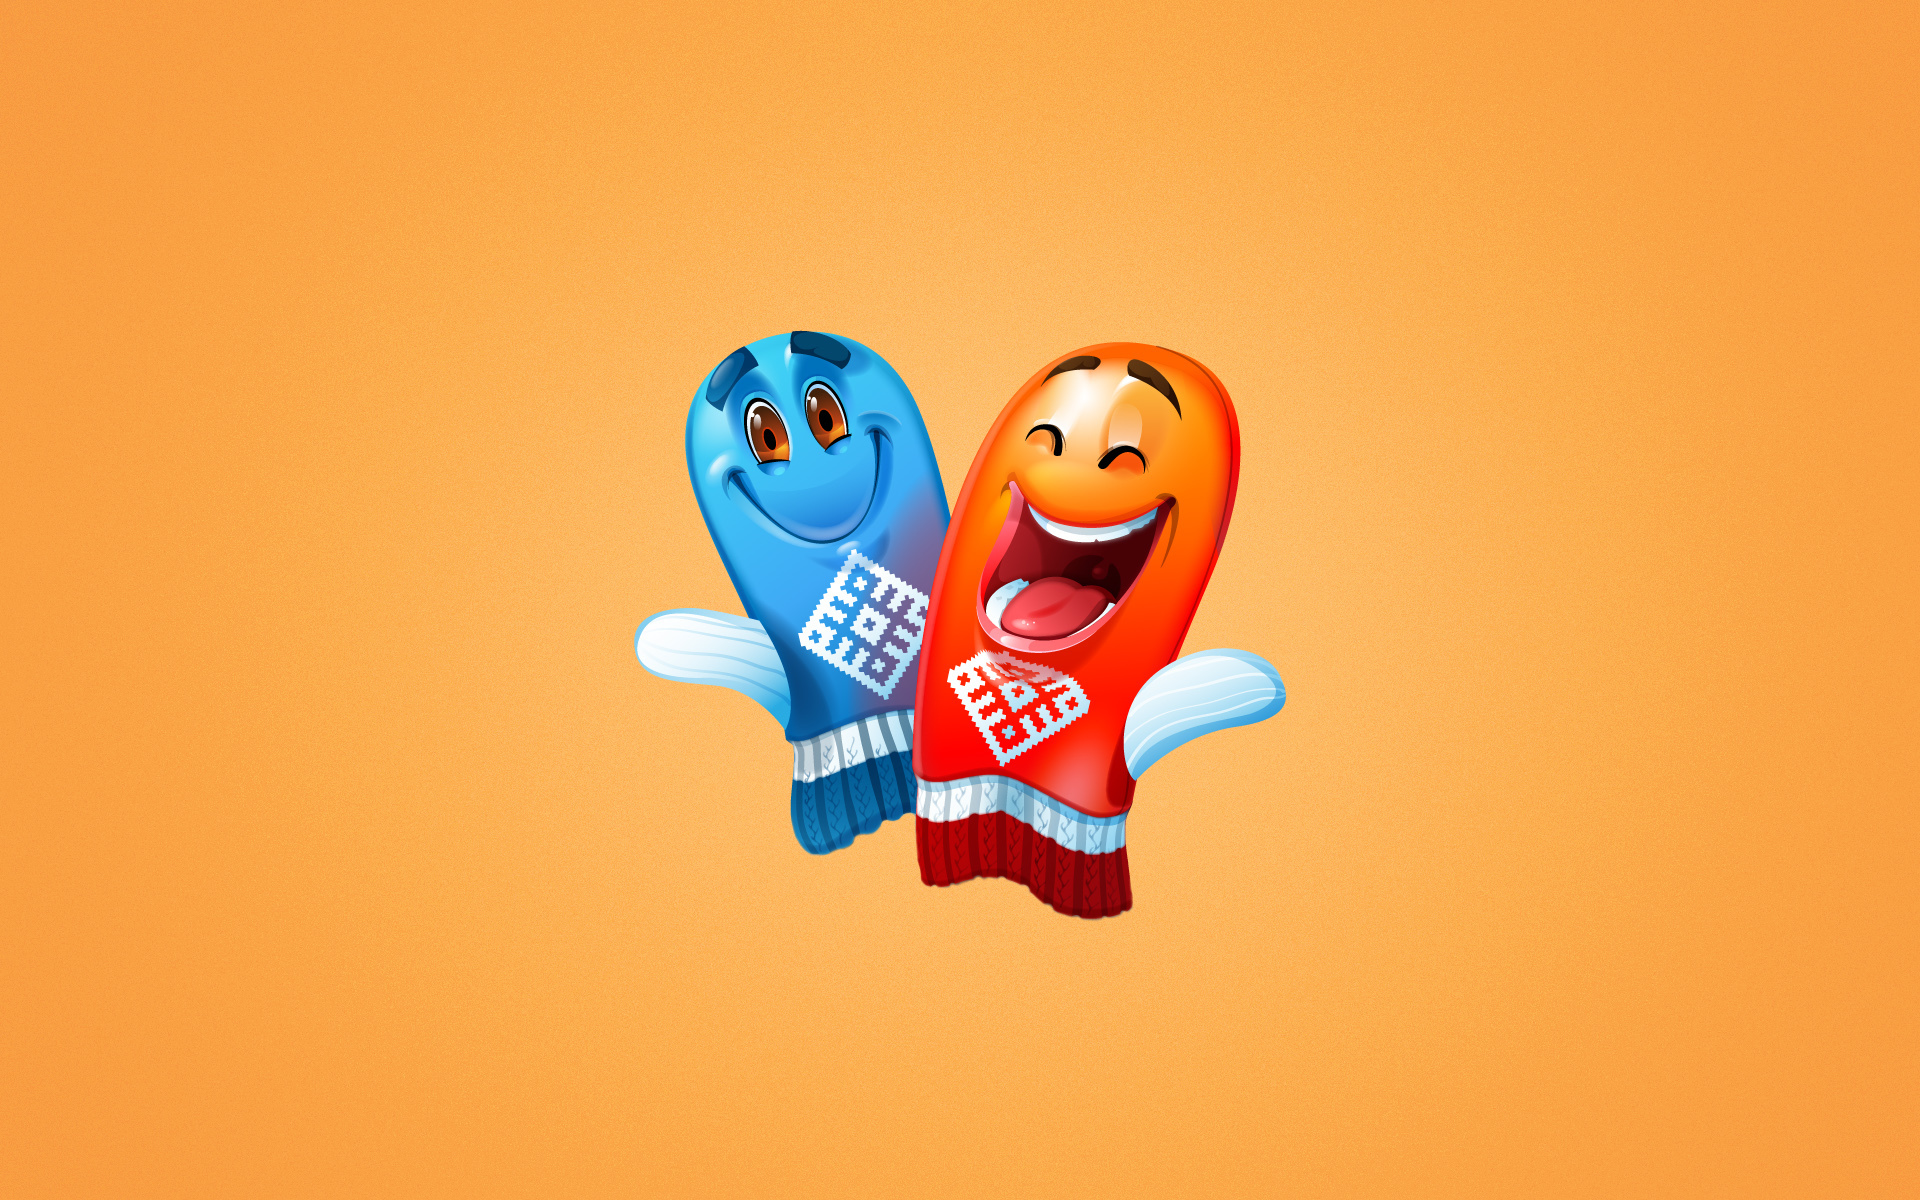 Image: Mittens, blue, red, smile, joy, couple, greeting, orange background